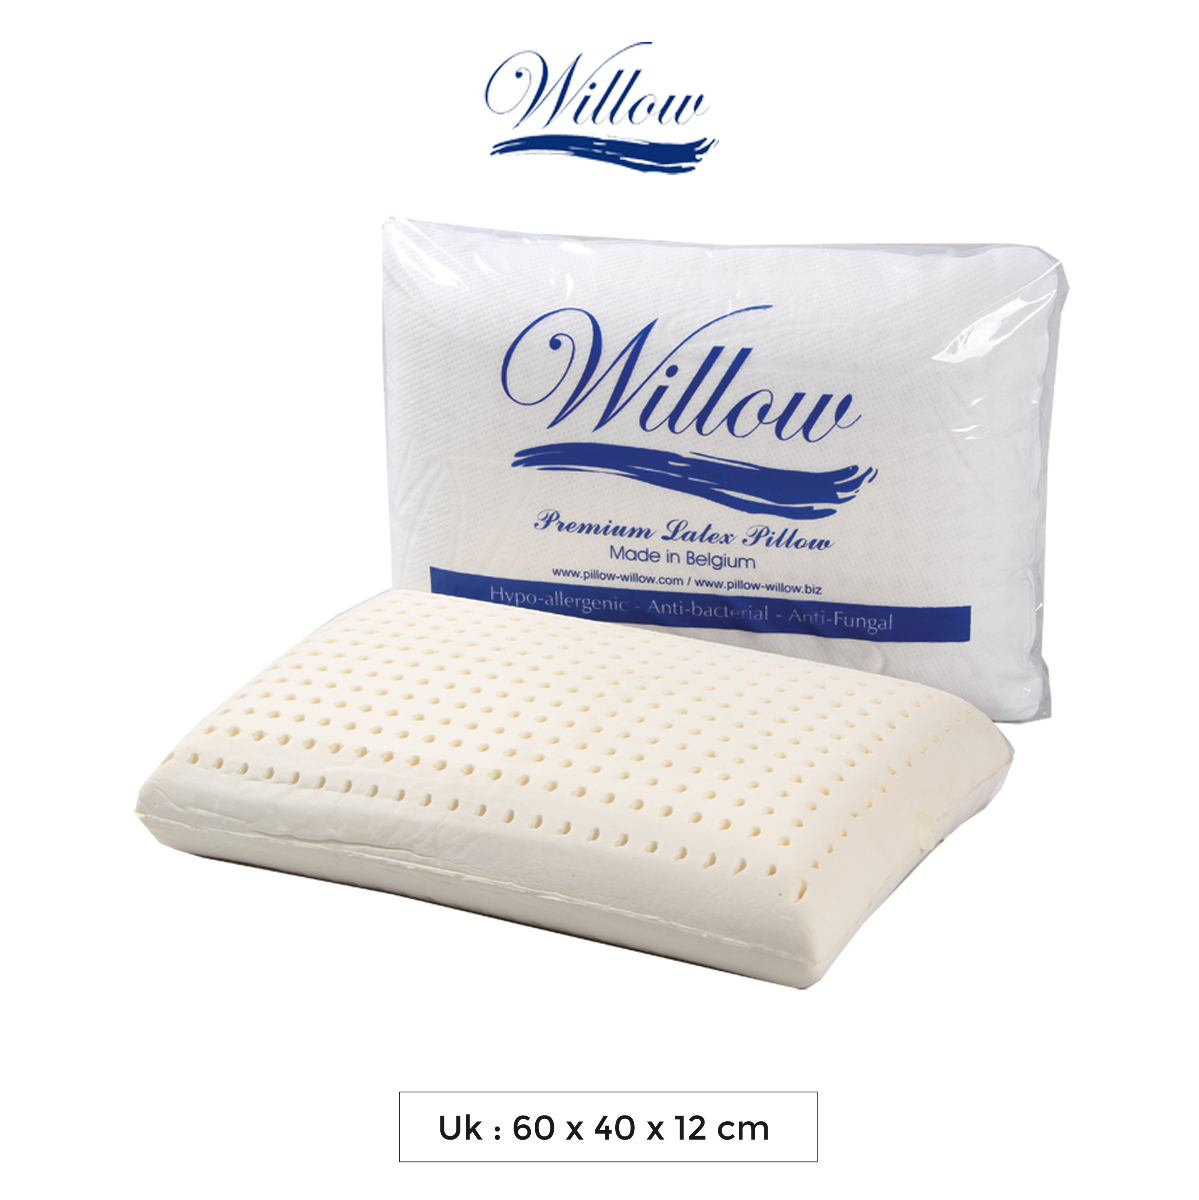 Willow Pillow Standard Latex